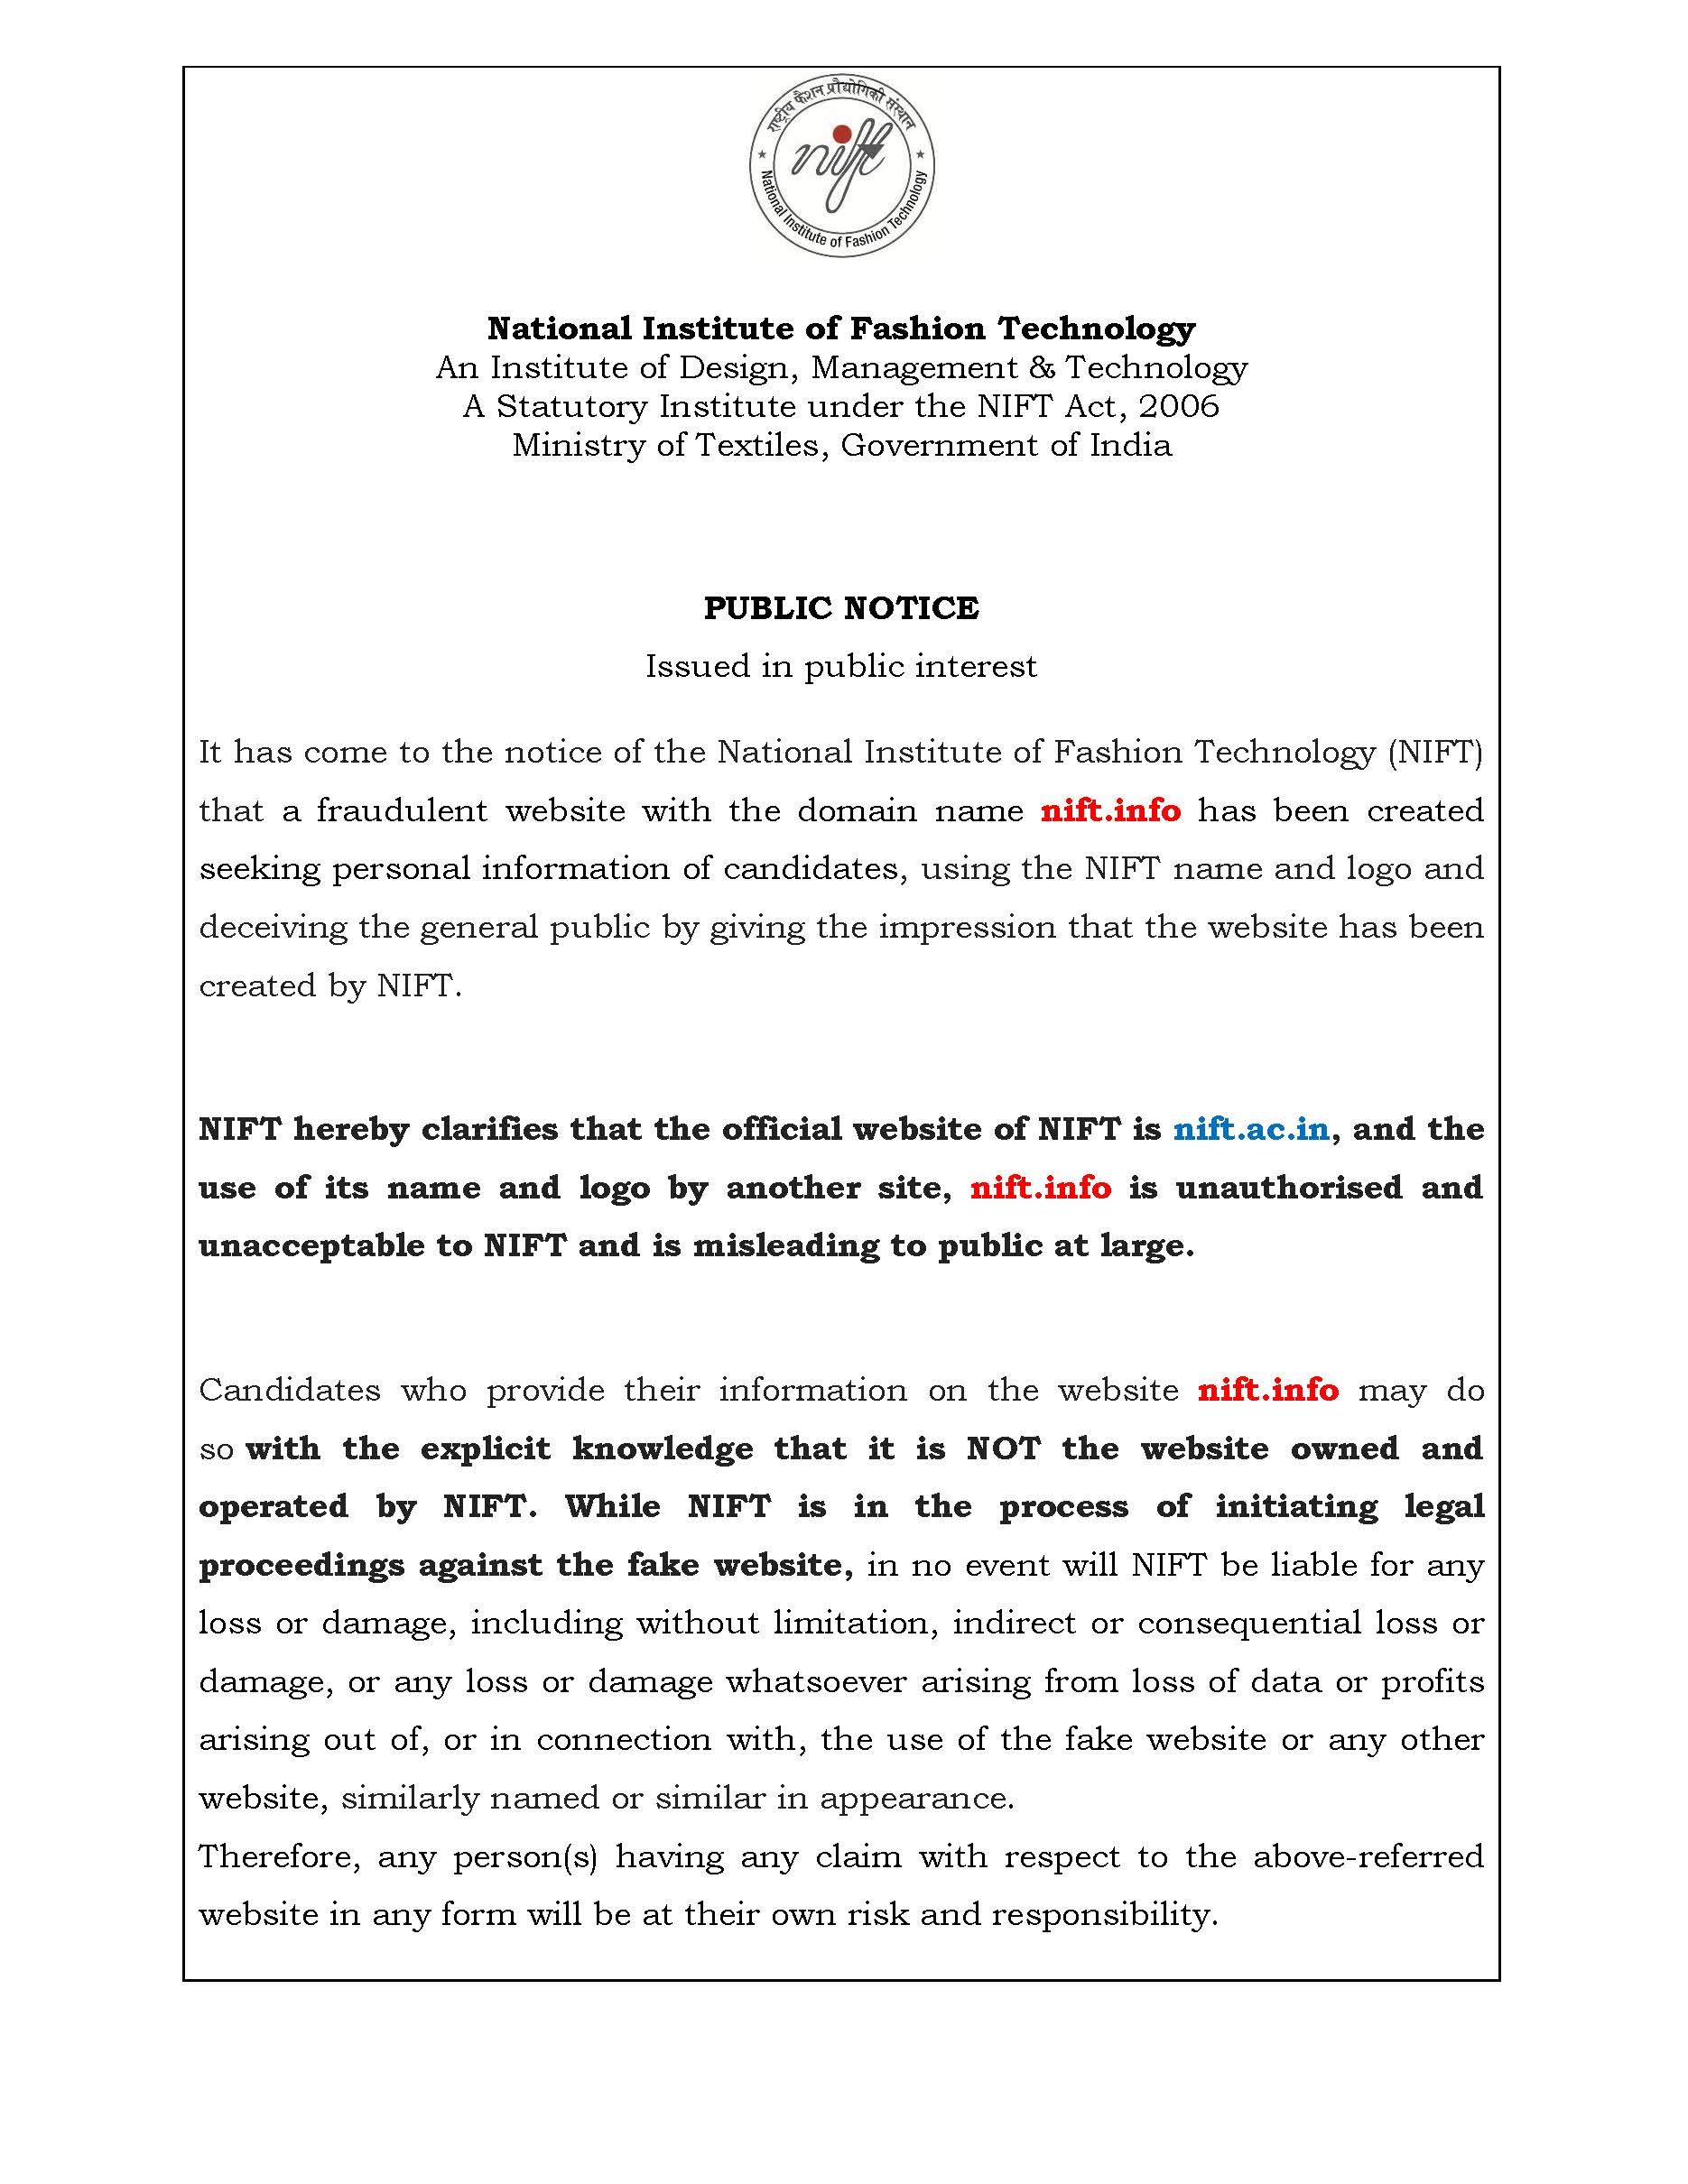 Public Notice reg NIFT website